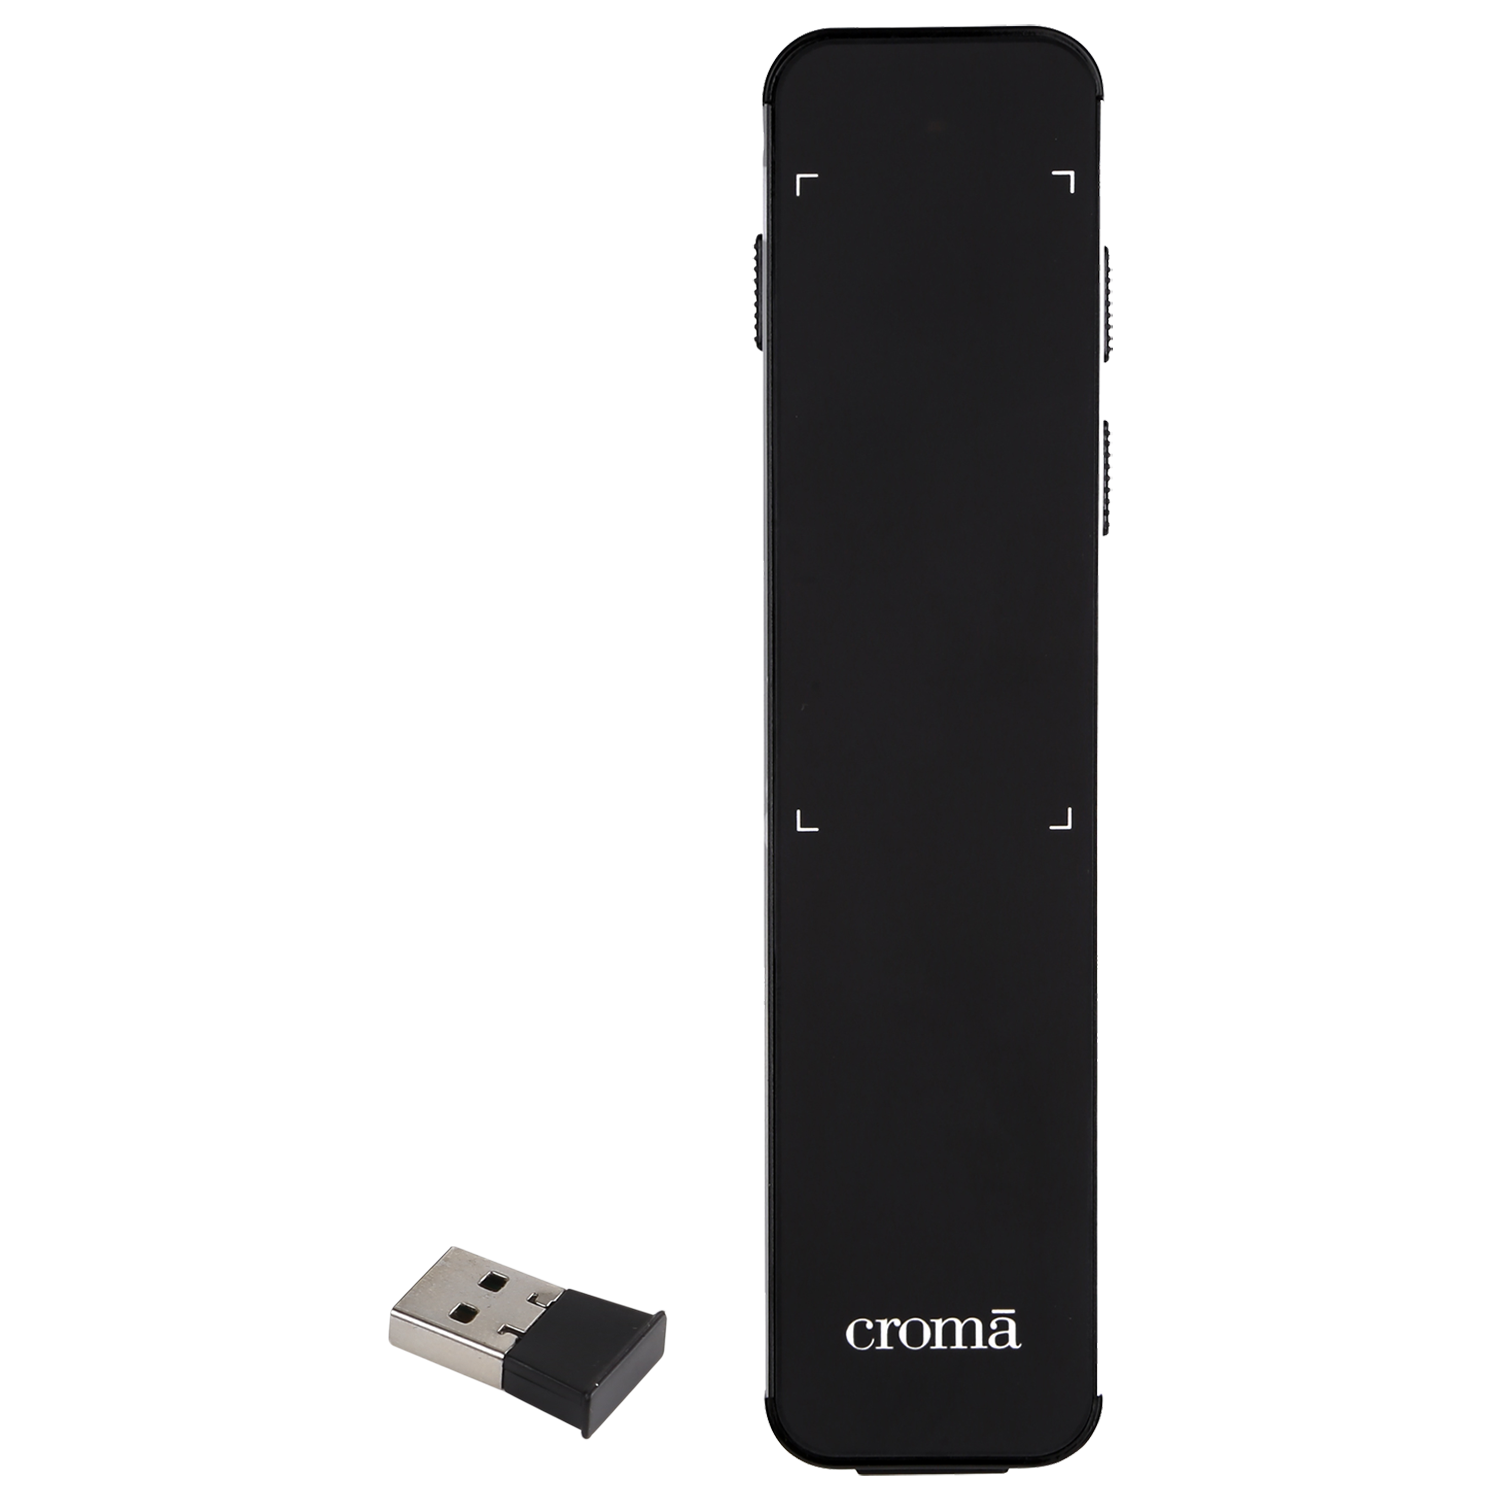 Croma USB Receiver Laser Presenter (Single Finger Movement, CRXI3119, Black)_1